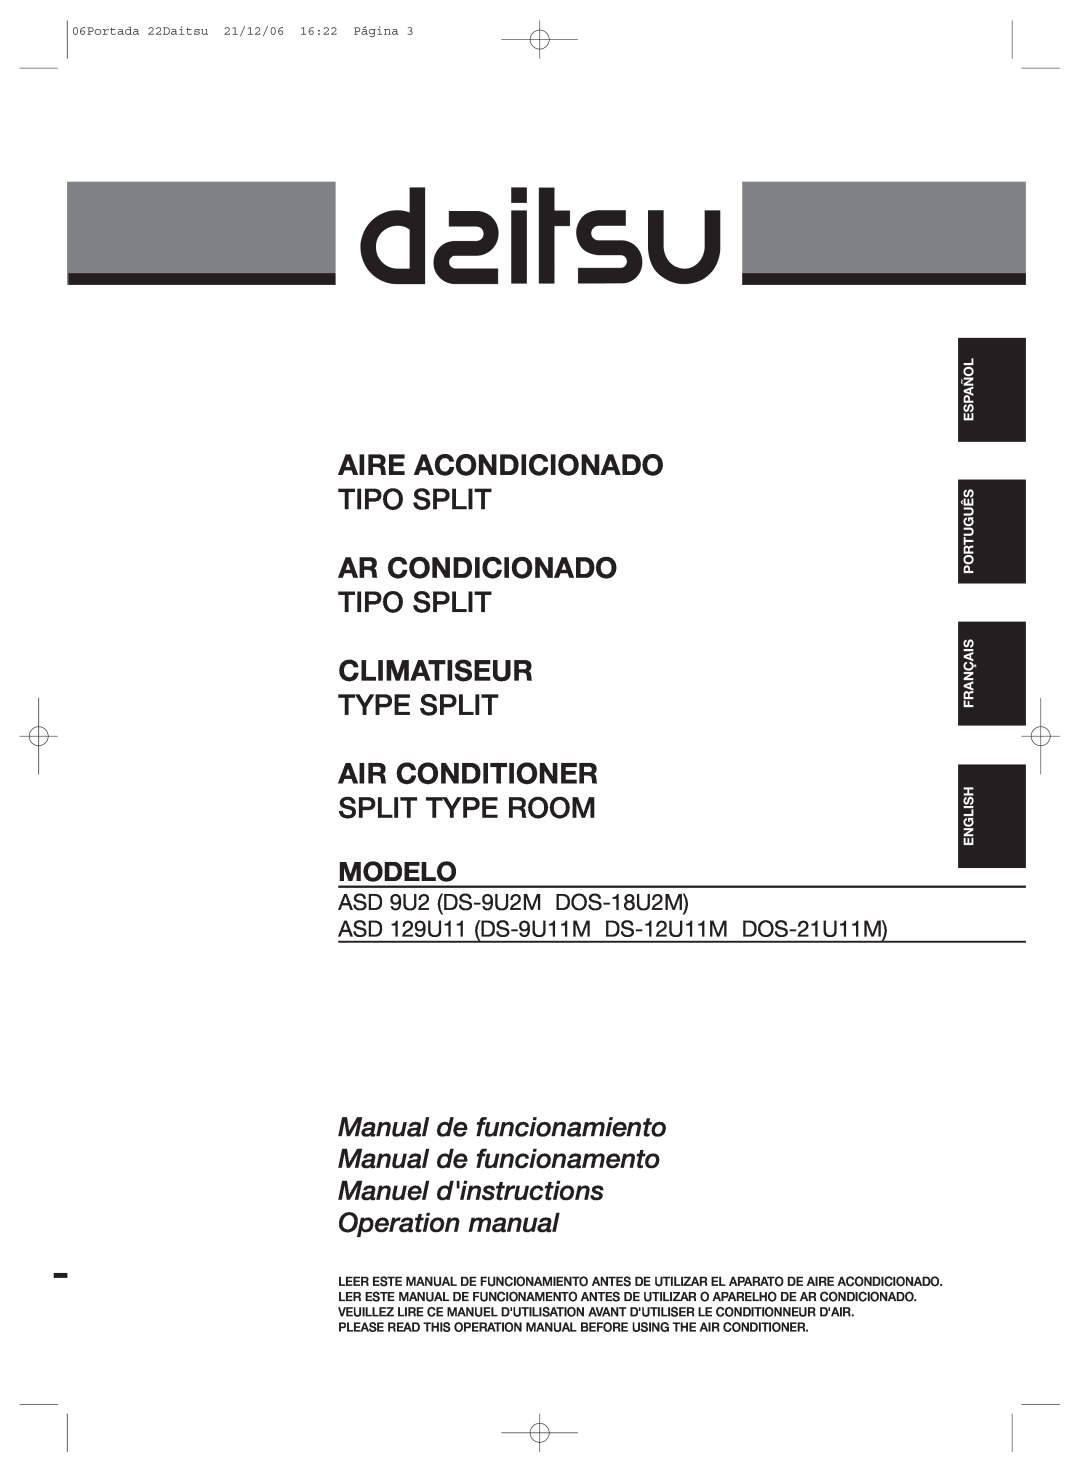 Daitsu ASD 129U11 operation manual Aire Acondicionado, Tipo Split, Ar Condicionado, Climatiseur, Type Split, Modelo 